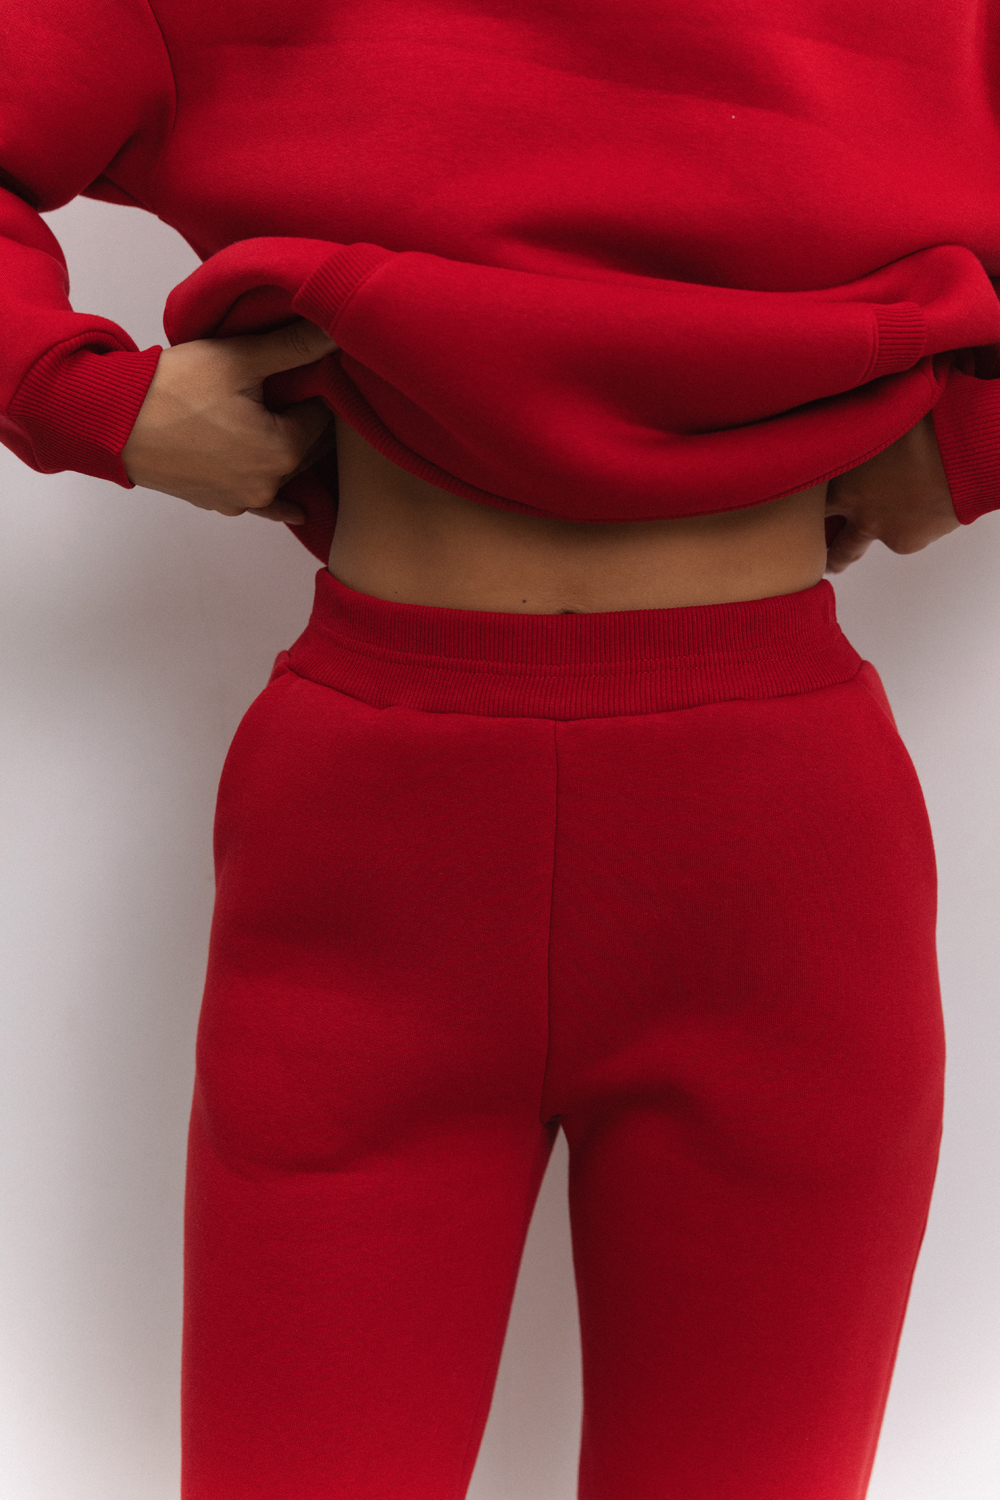 Red warm sweatpants